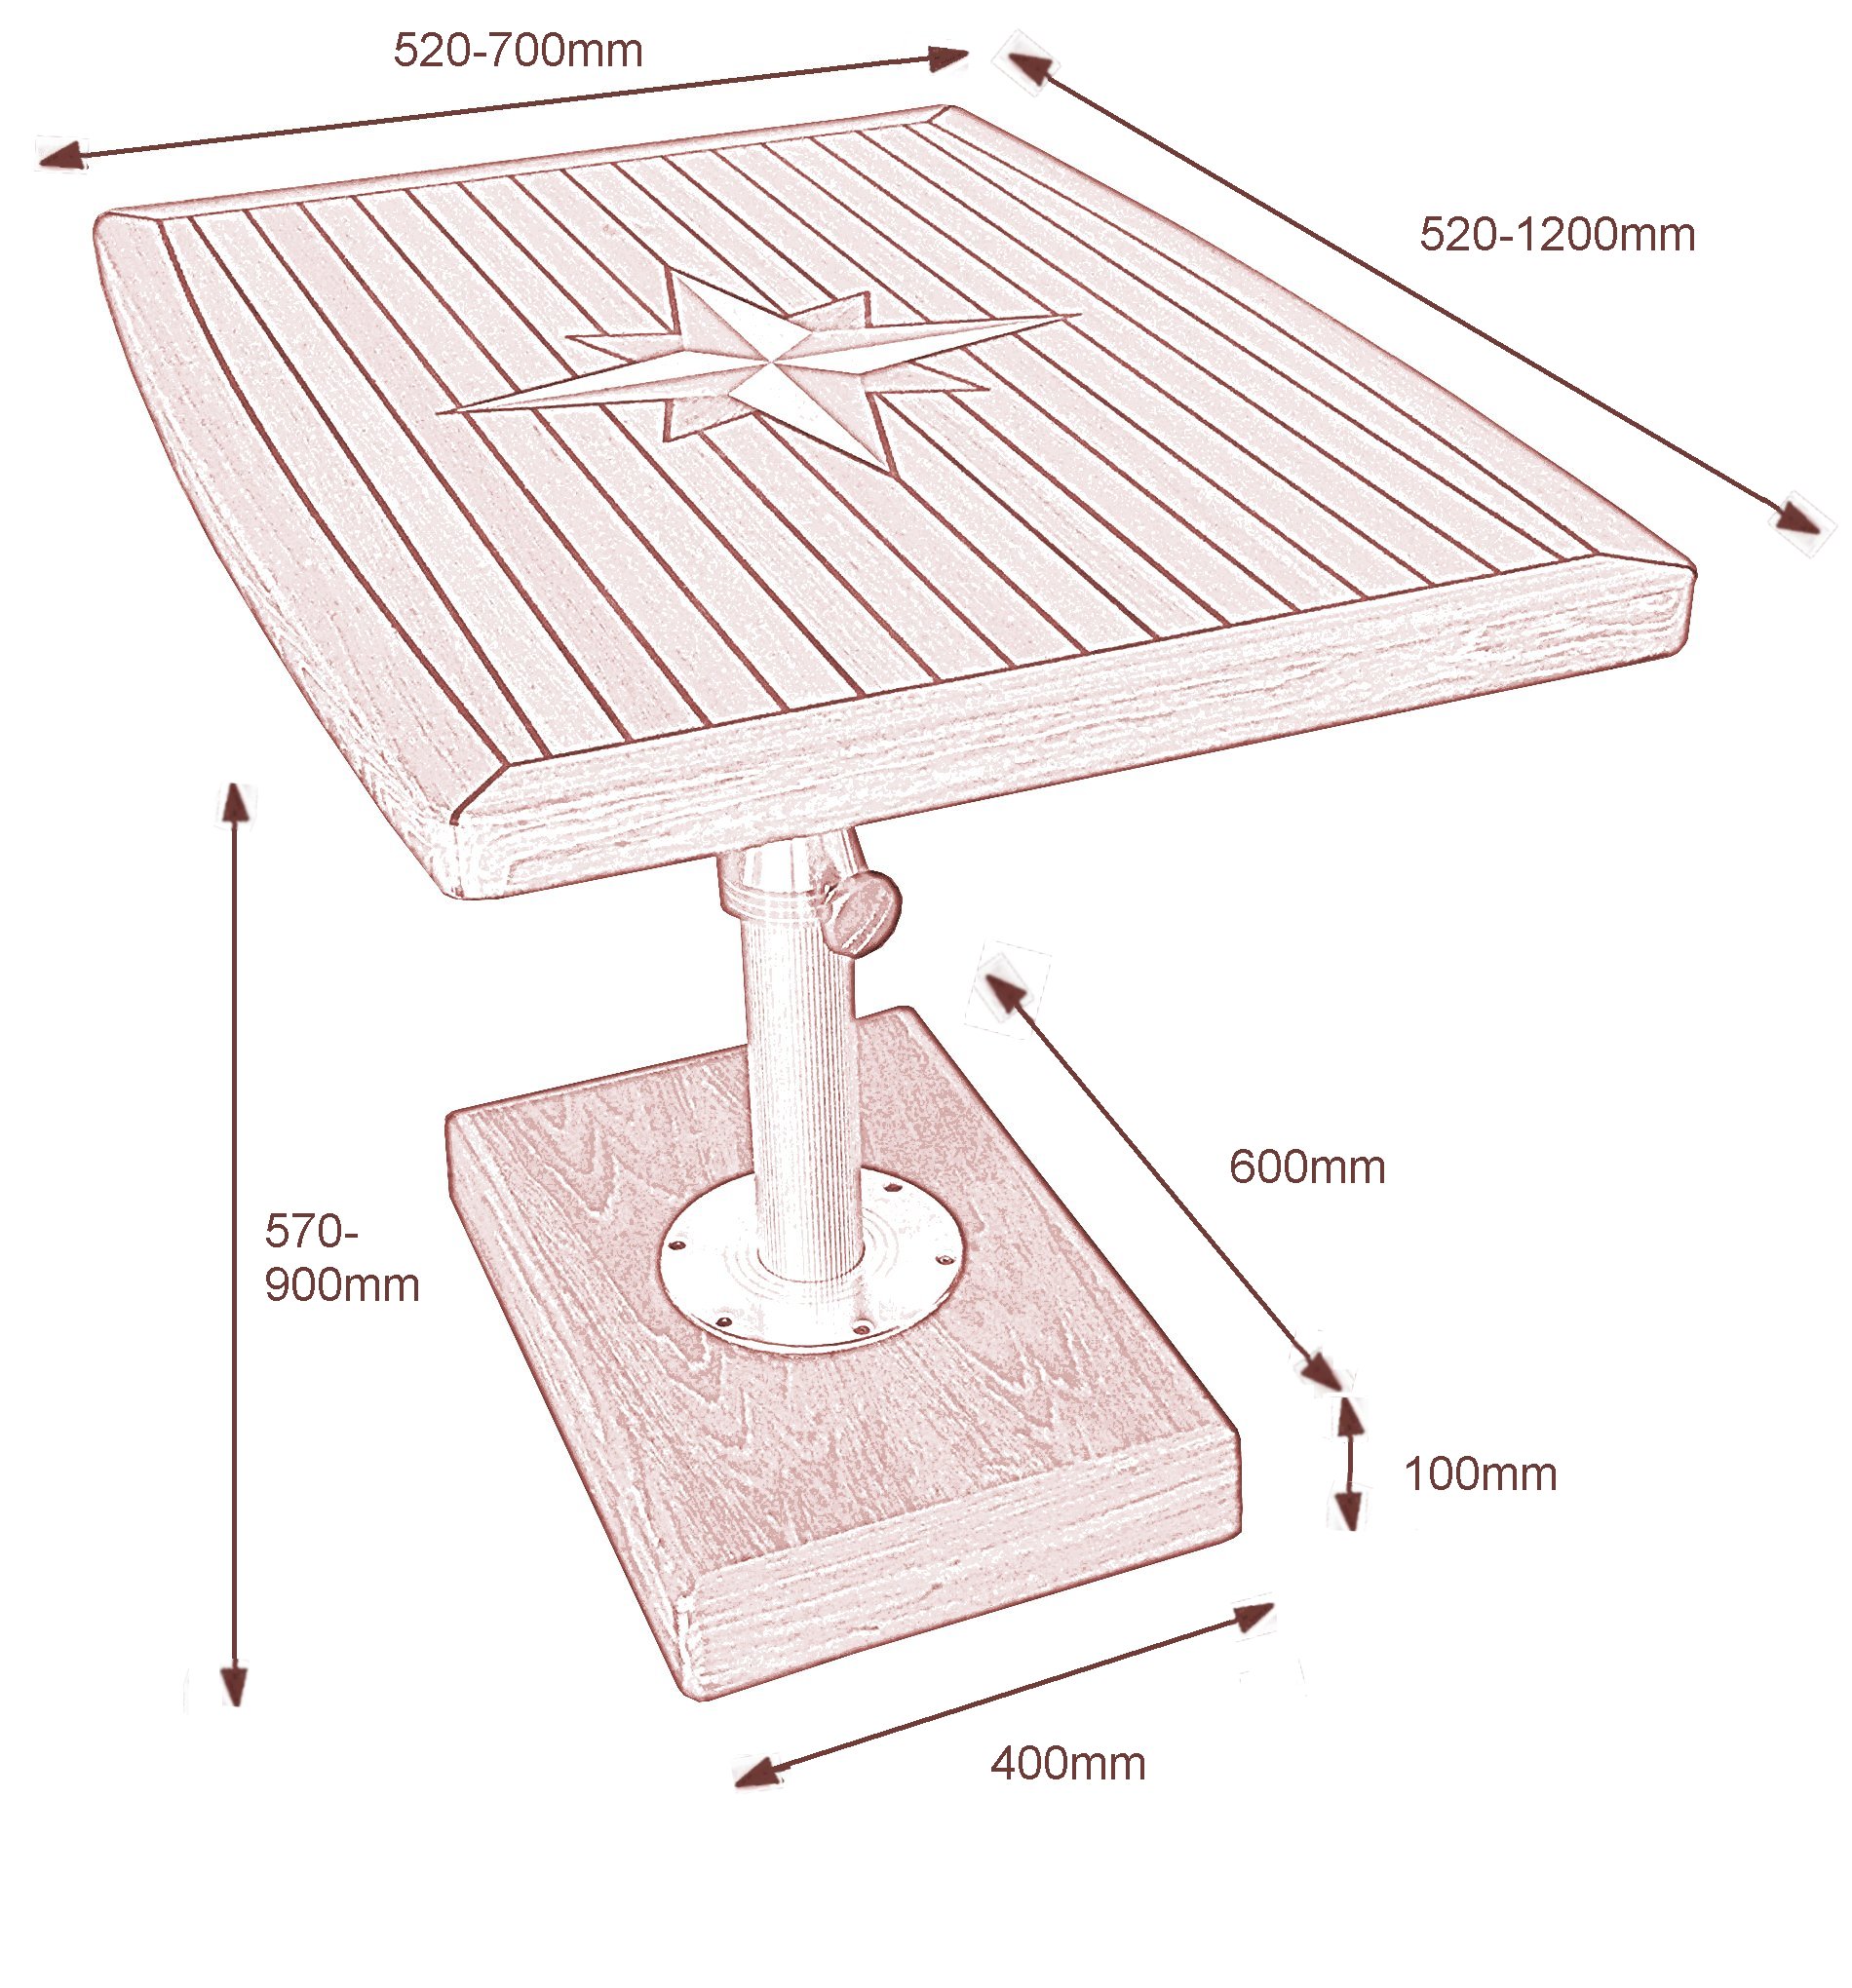  Sketch: Table